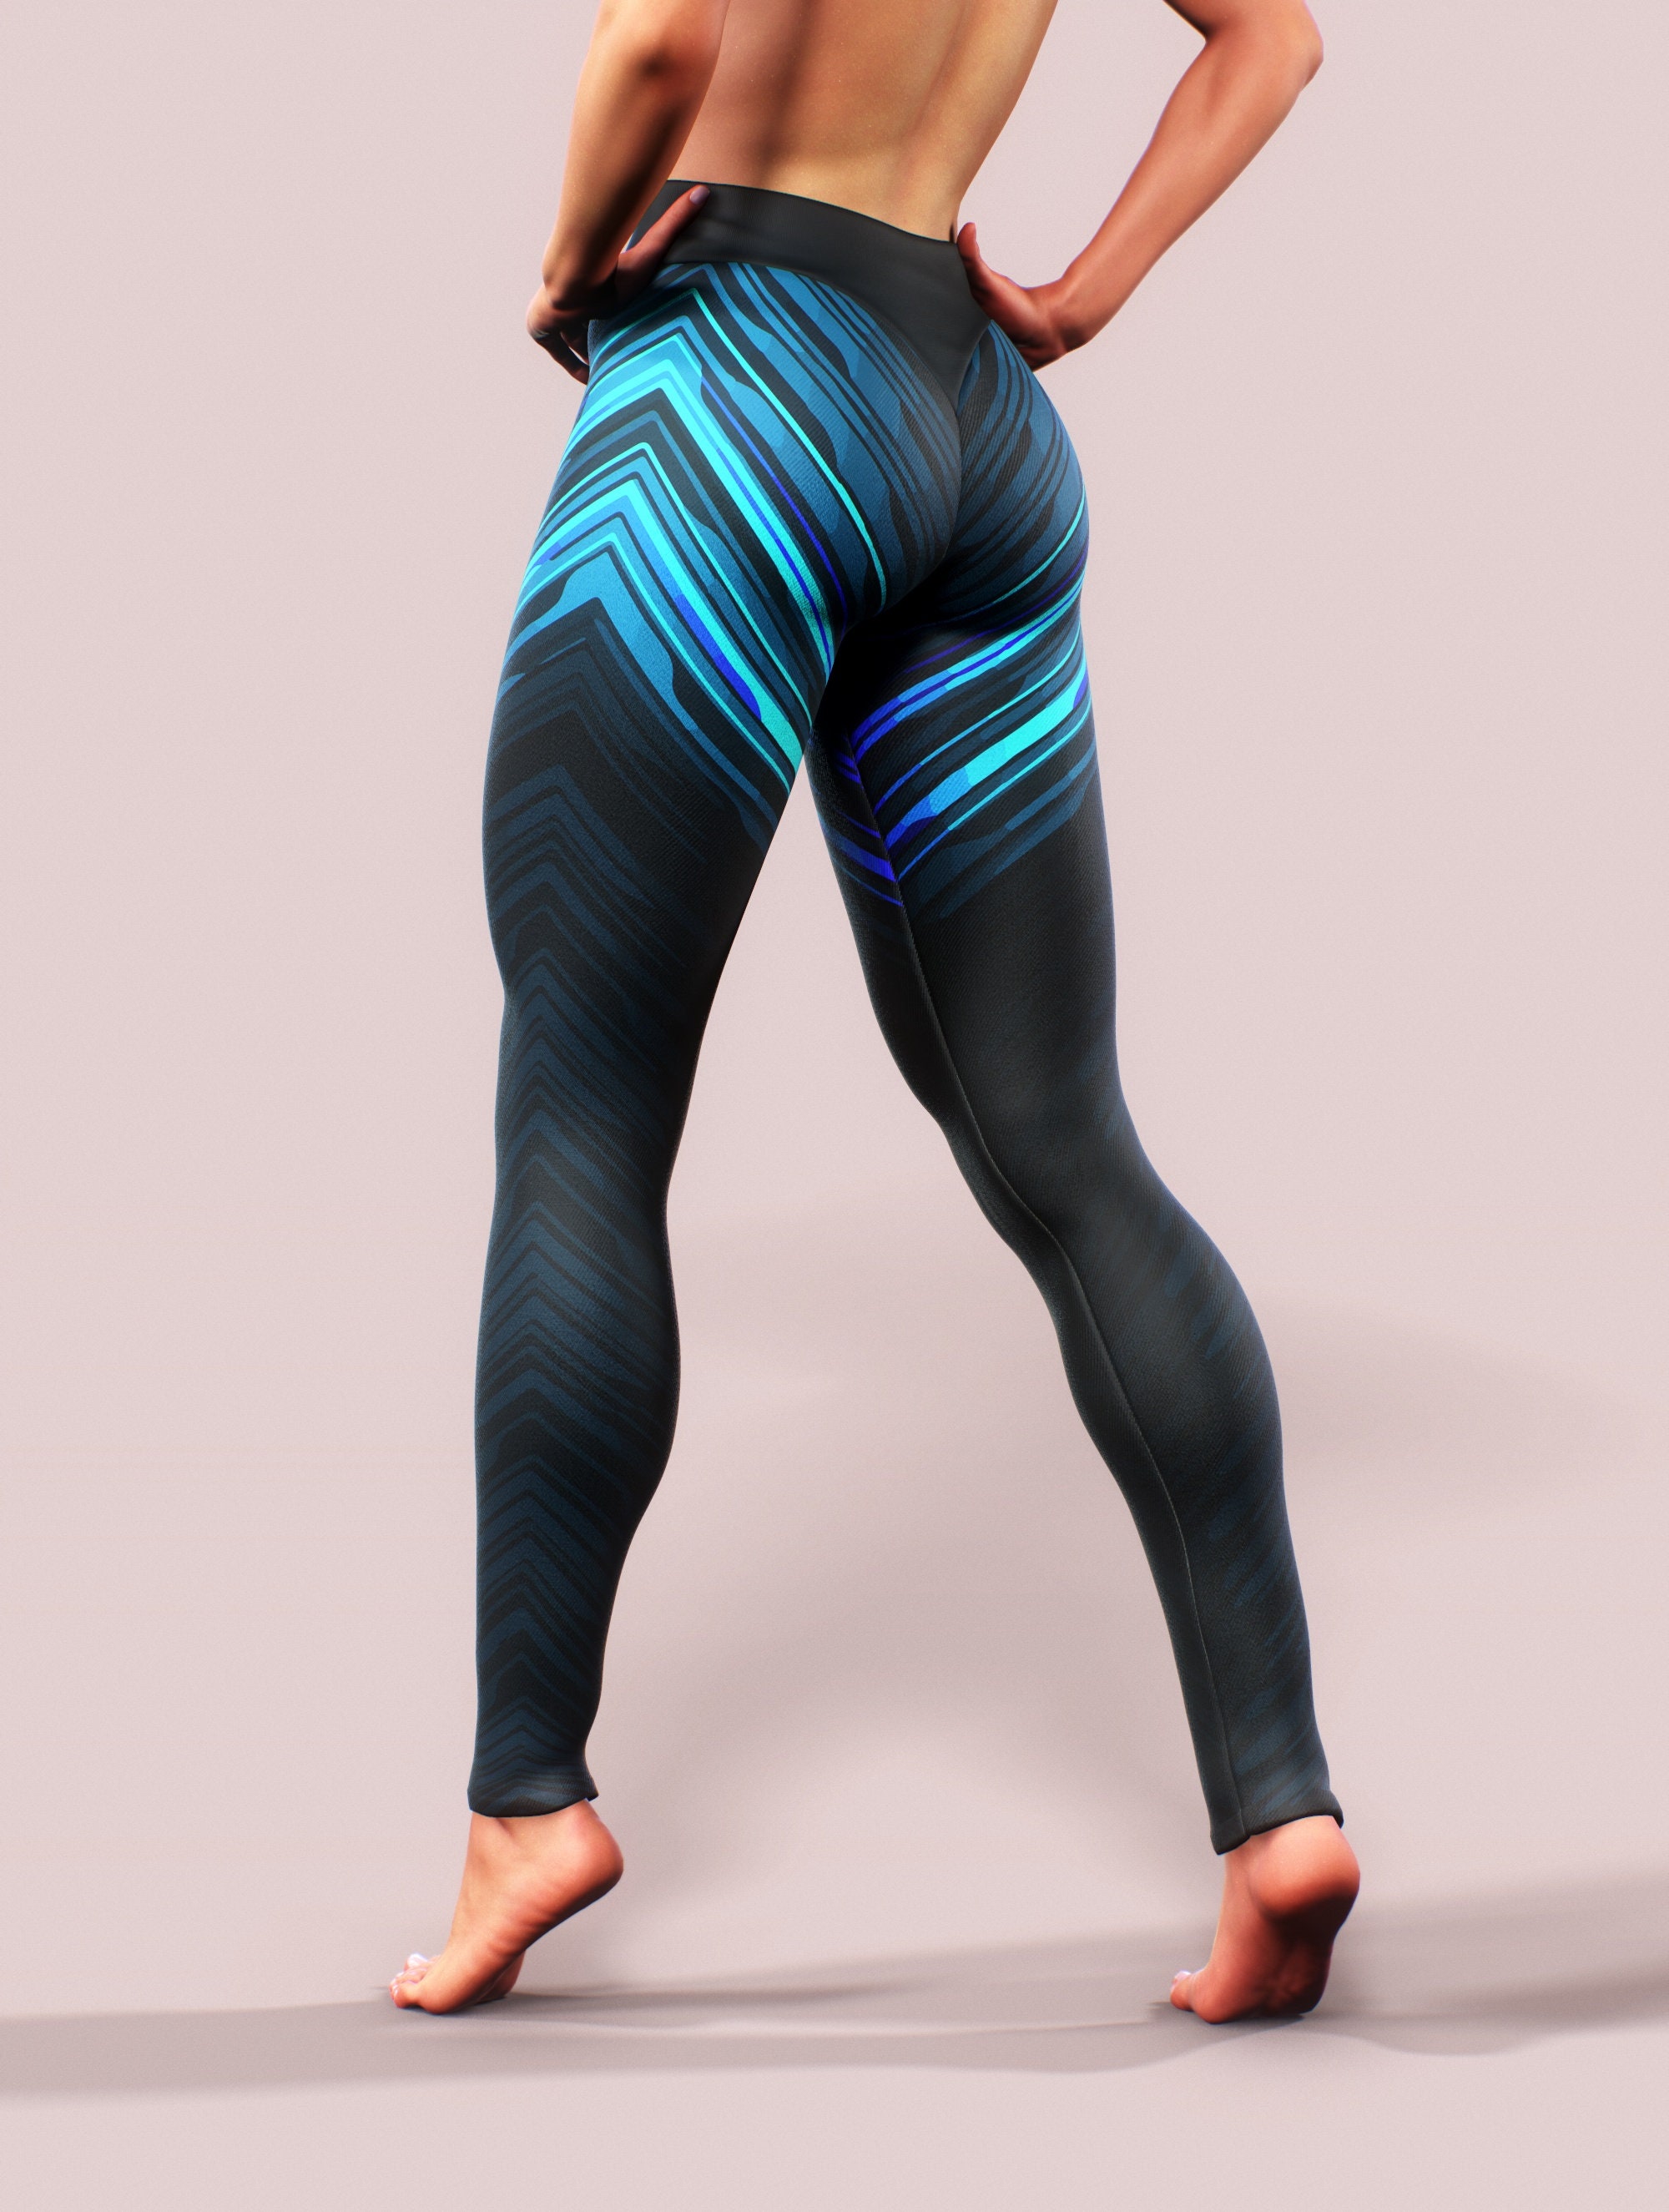 Robotic Leggings Technology Fit Bike Shorts Yoga Pants Workout Clothing  Women Capri Blue Printed Athletic Apparel Push up Gym Trousers -  Canada